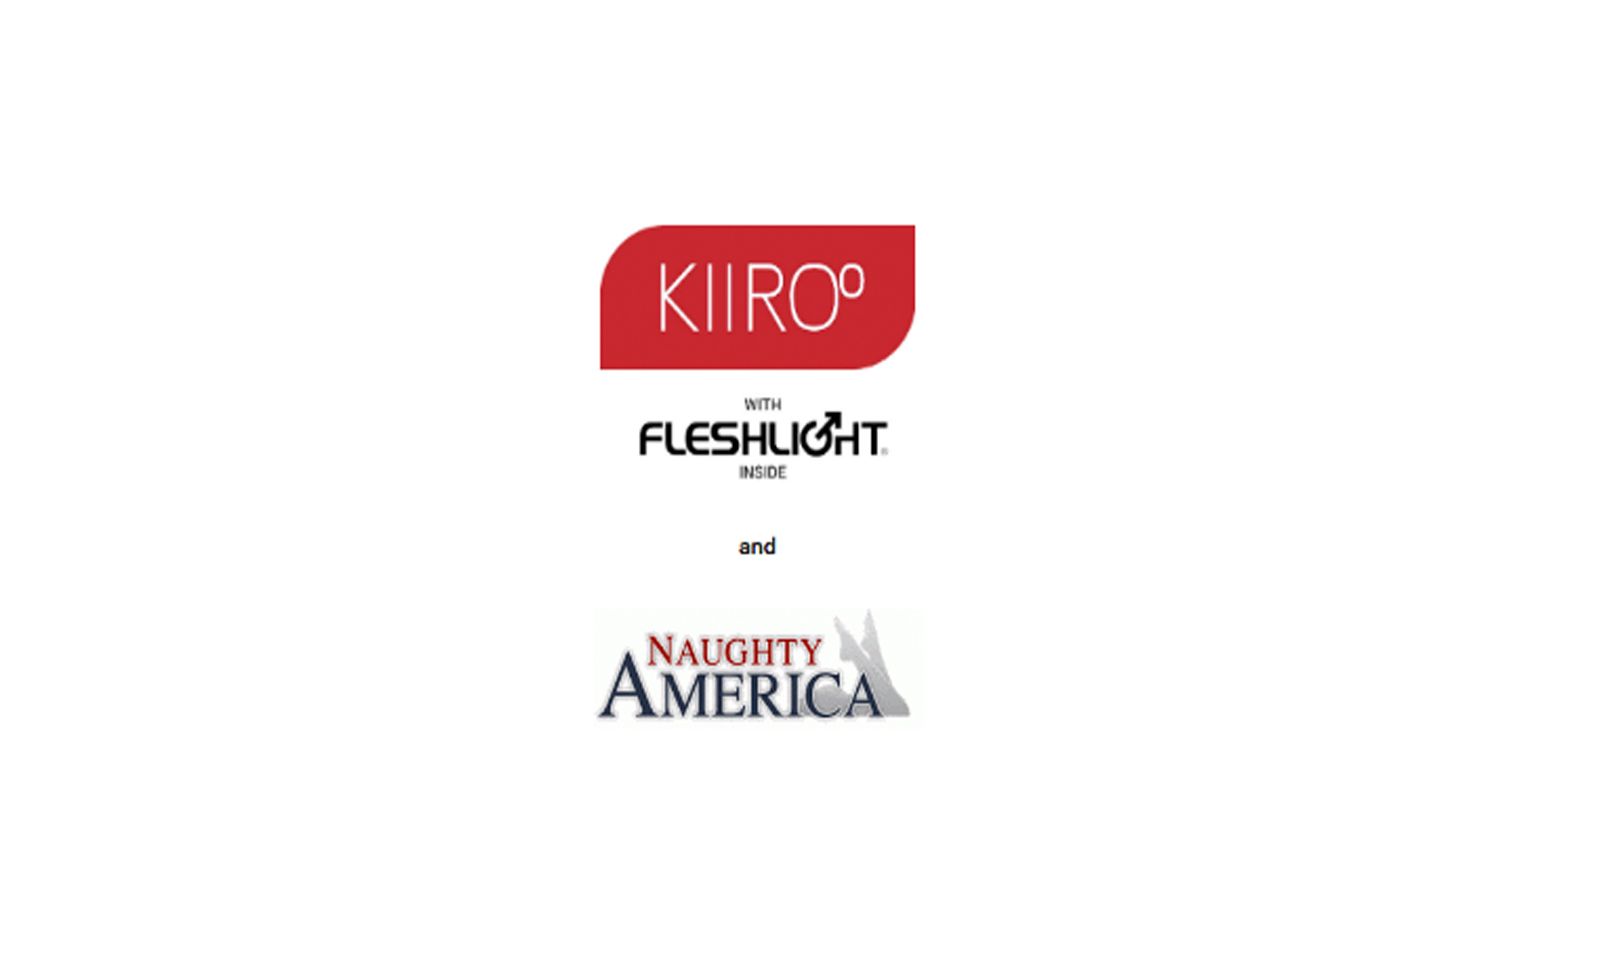 Kiiroo and Naughty America Begin Partnership